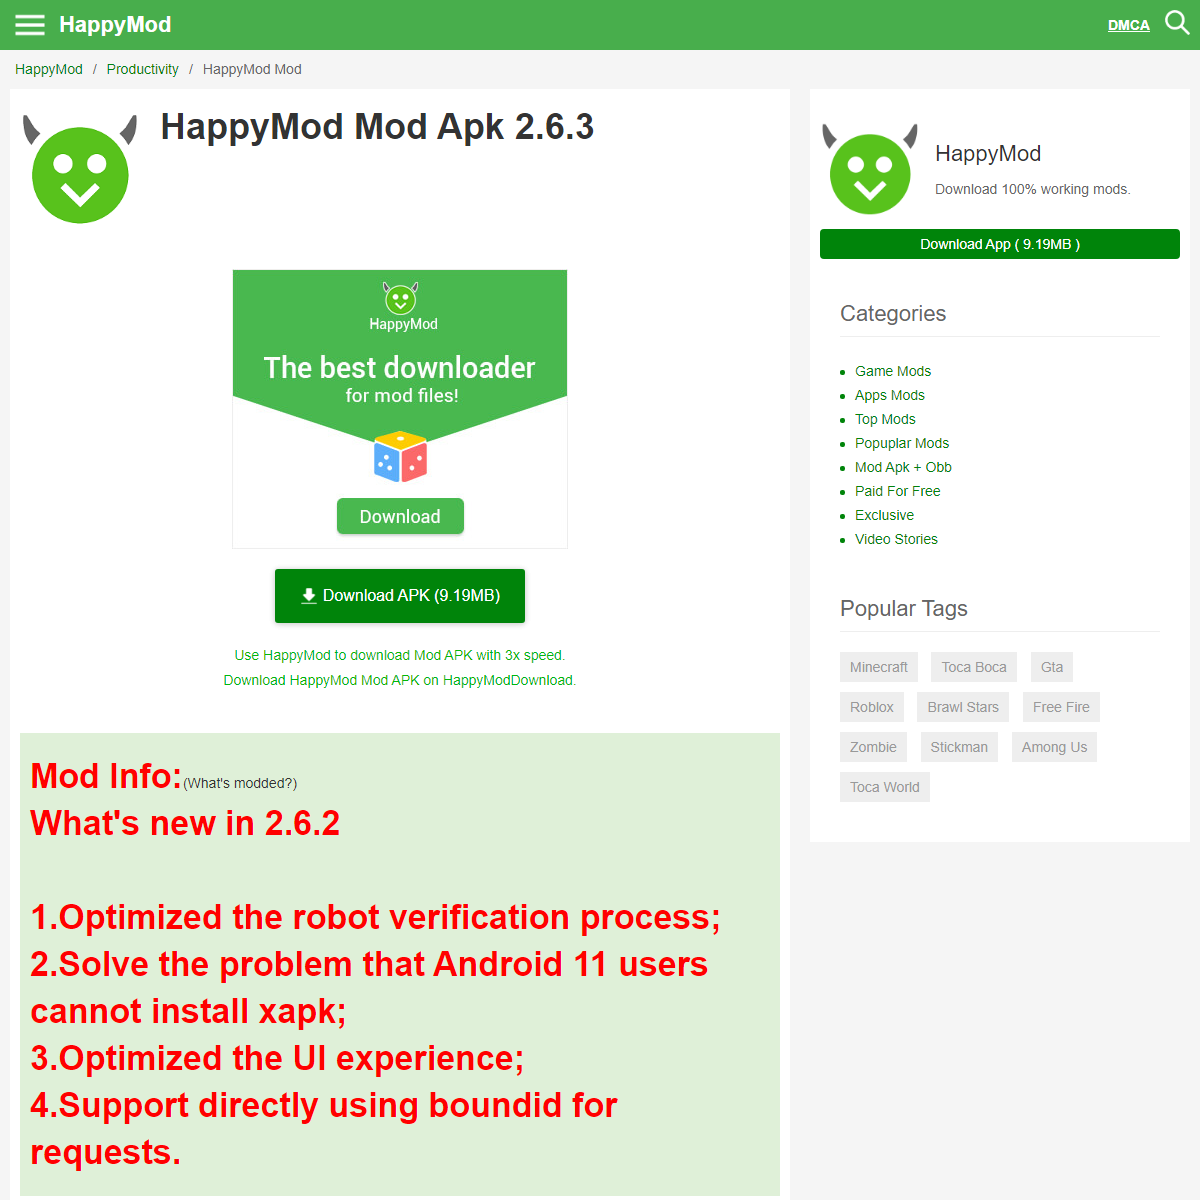 A complete backup of https://www.happymod.com/happymod-mod/com.happymod.apk/